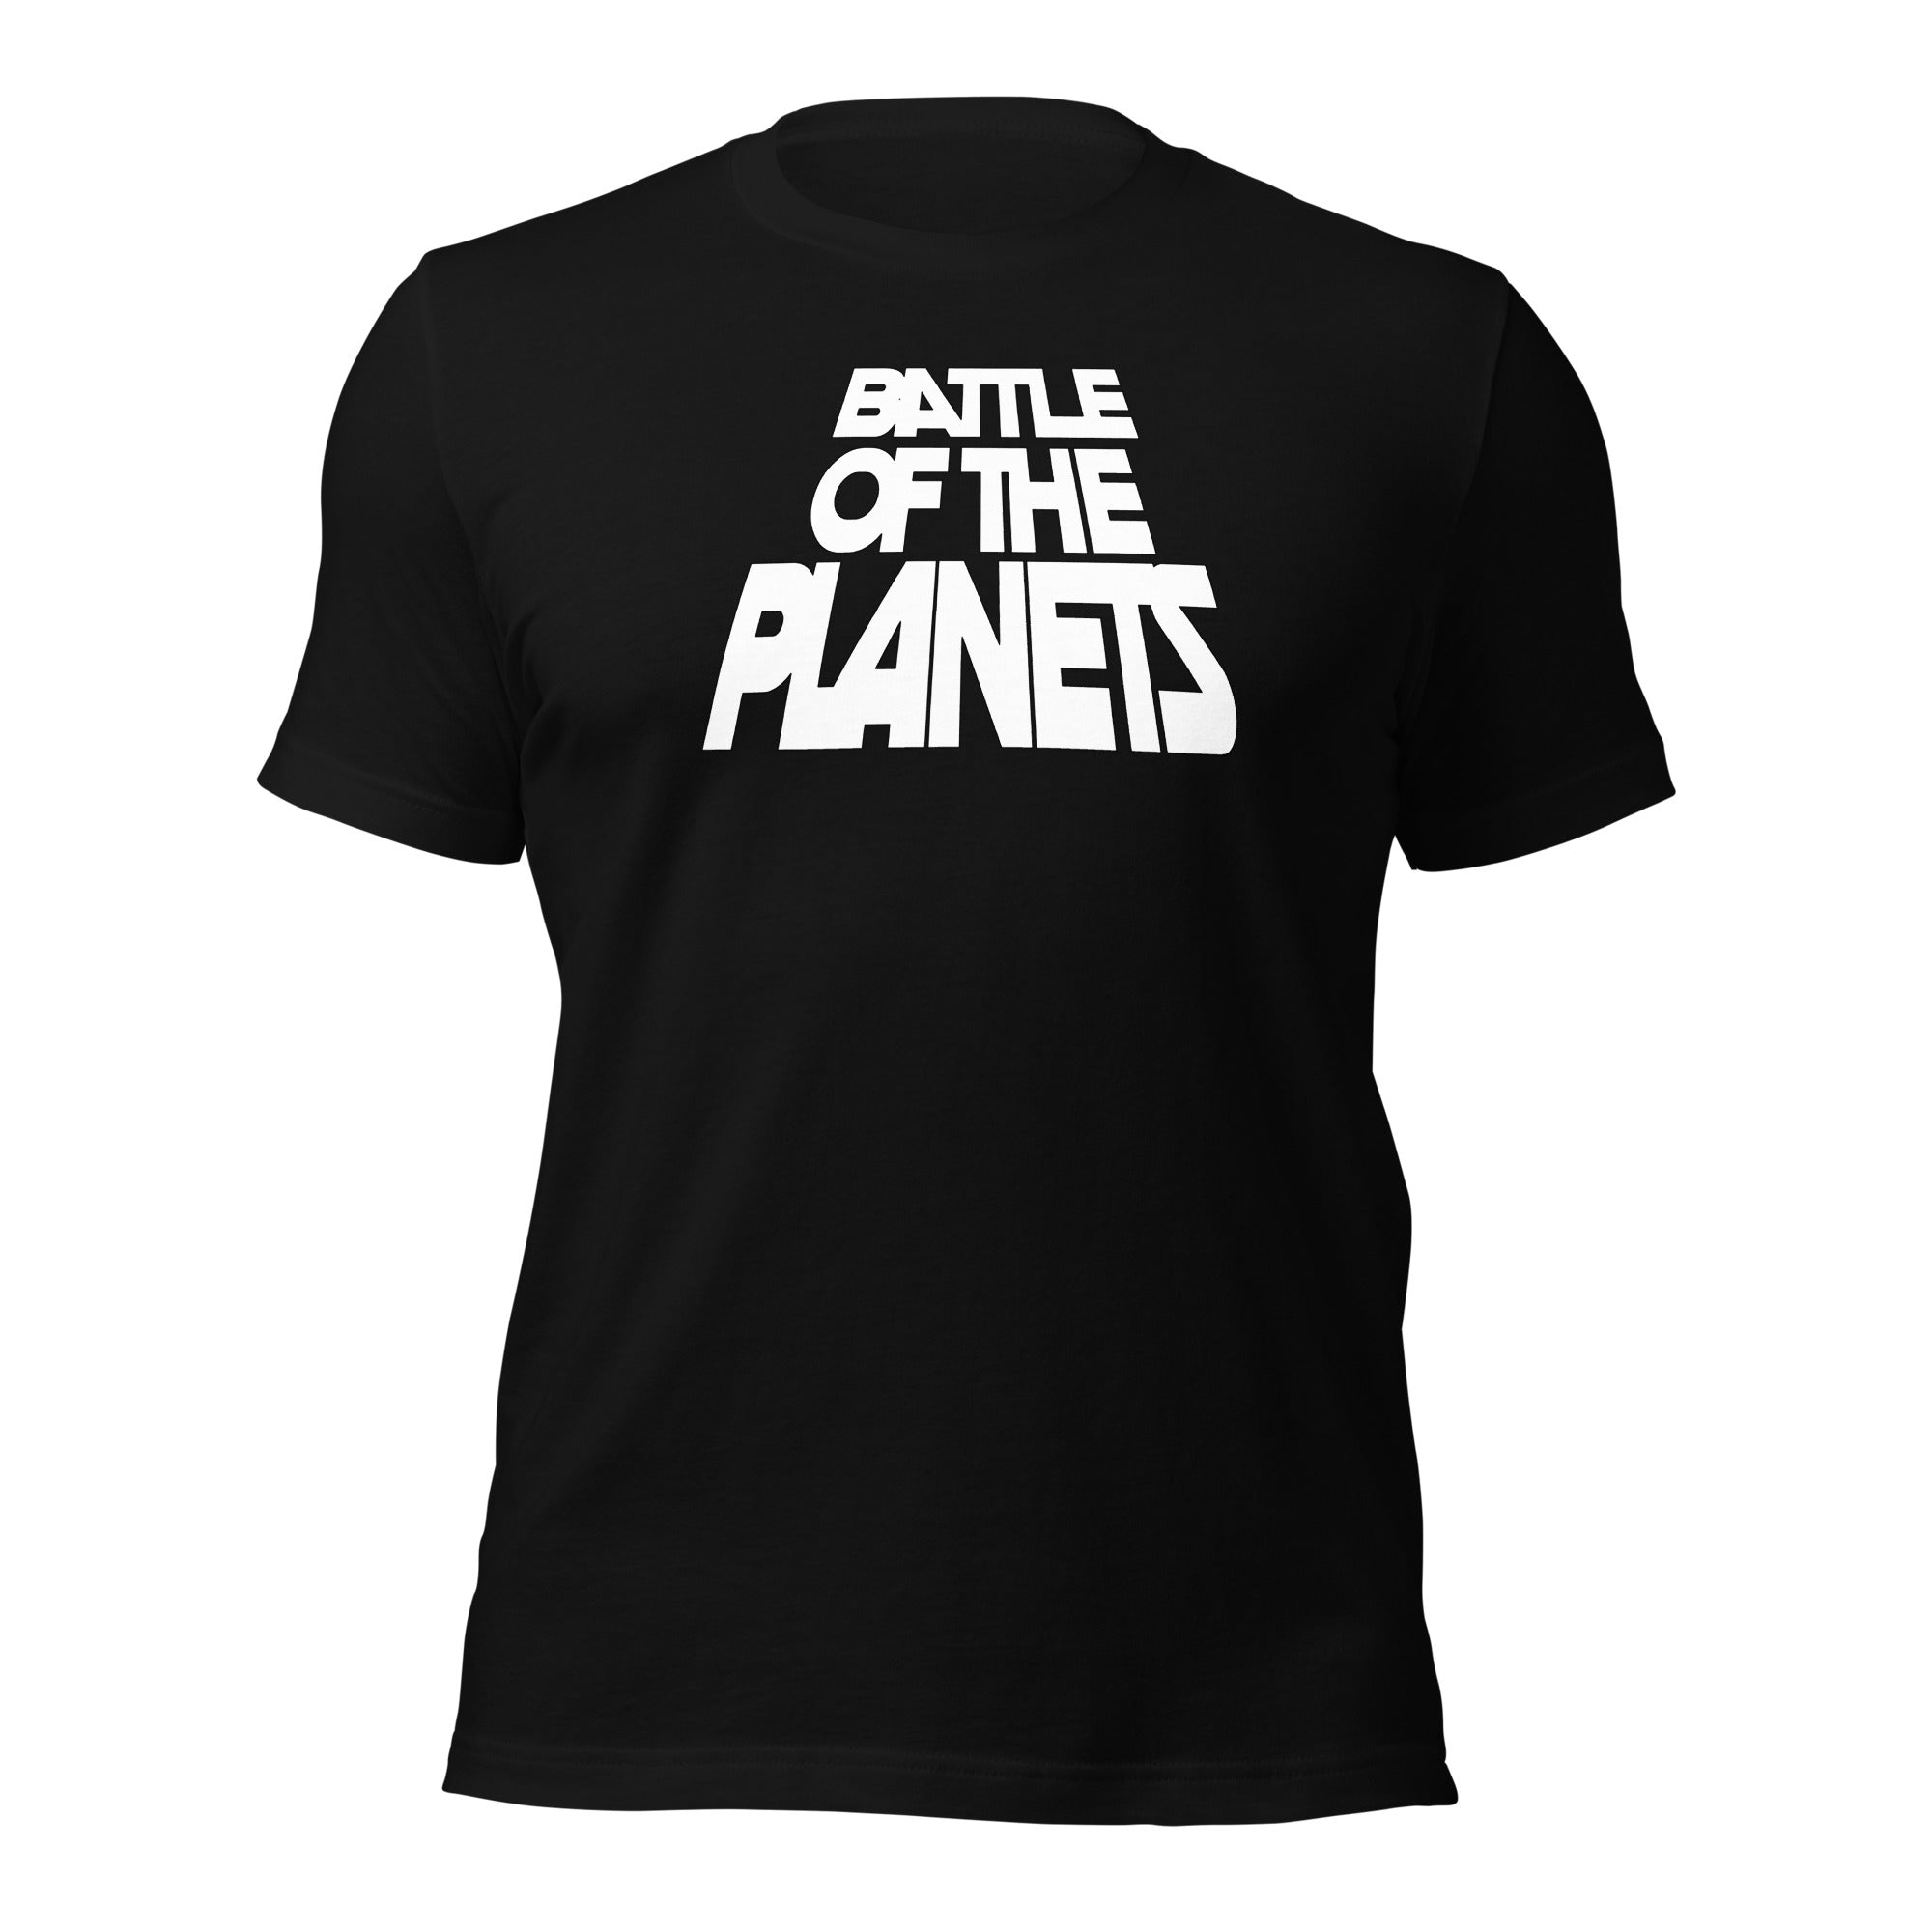 Battle Of The Planets Unisex t-shirt Battle Of The Planets Unisex t-shirt